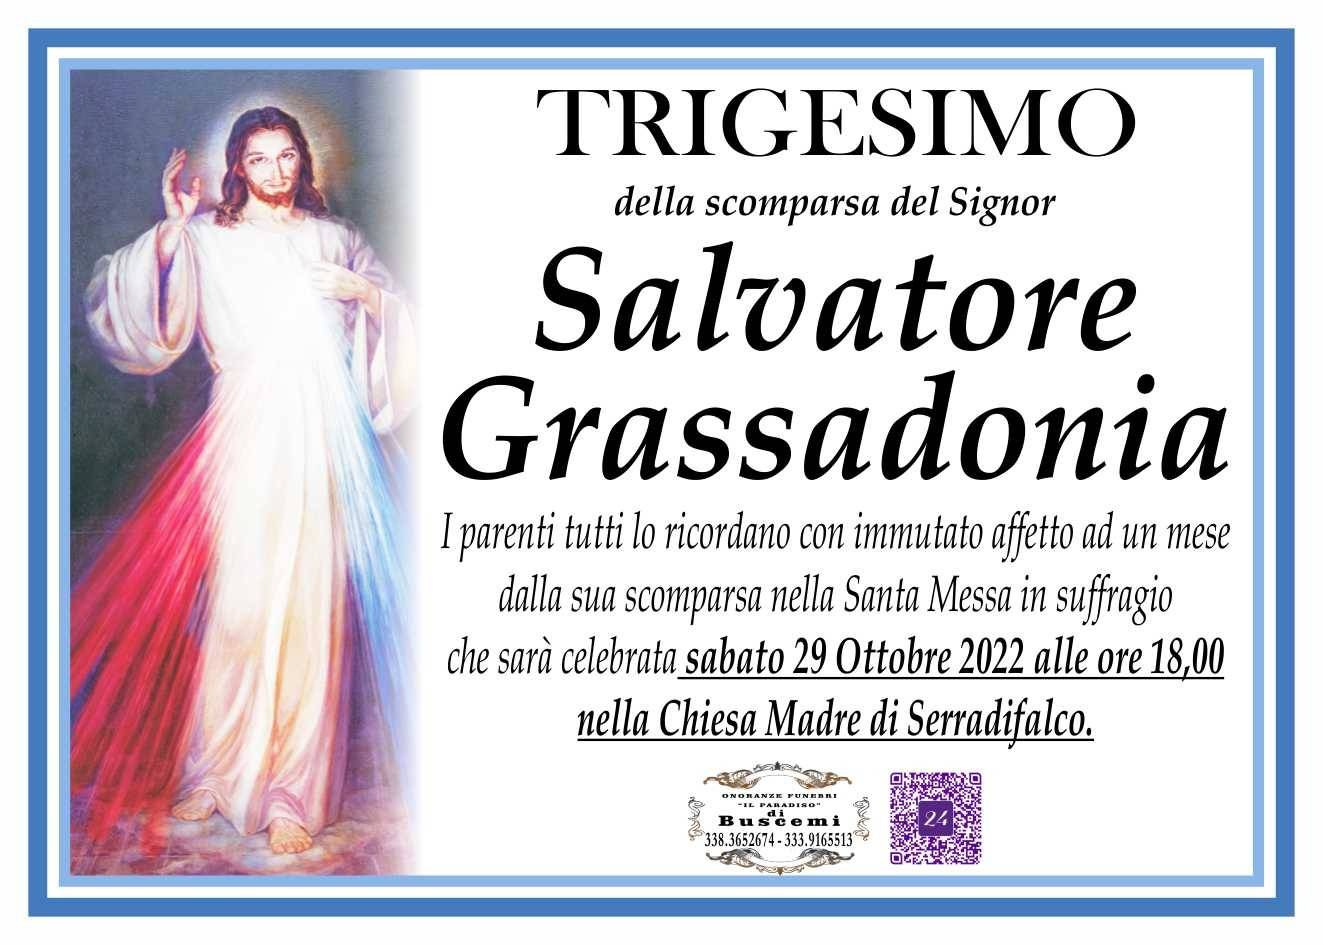 Salvatore Grassadonia